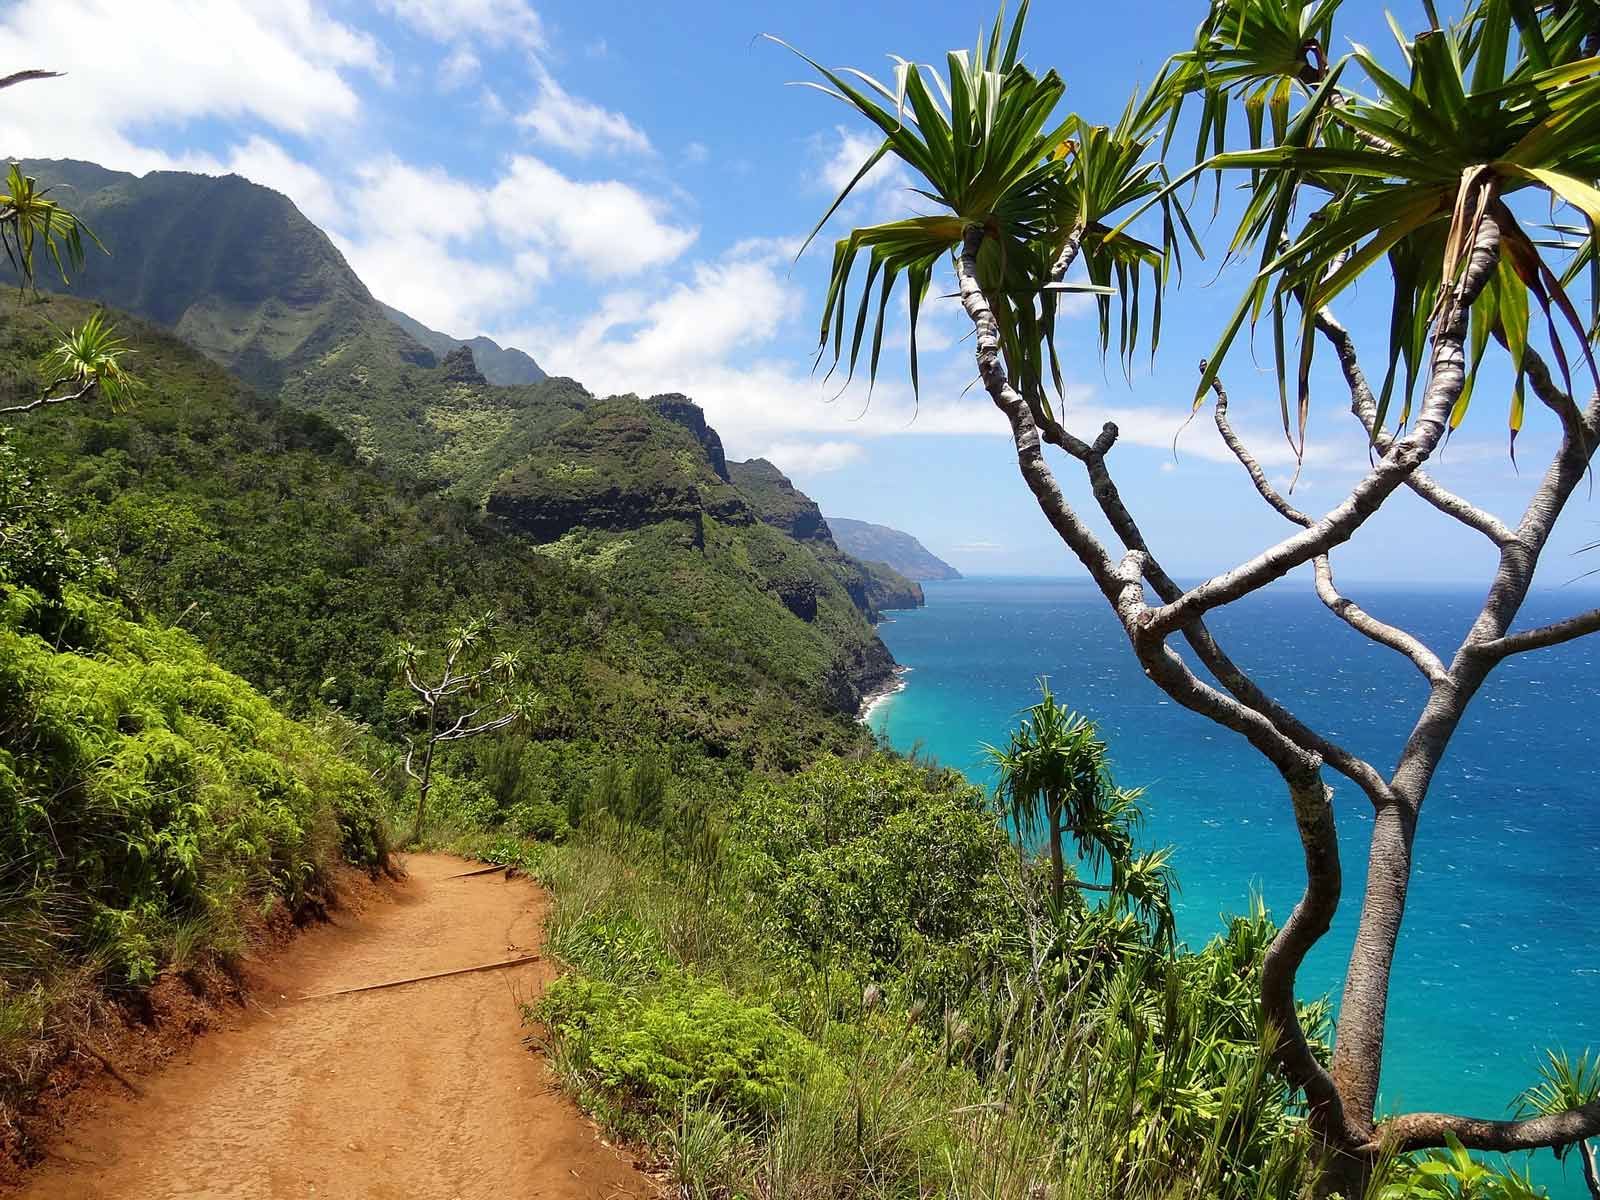 Where to stay in Hawaii Kauai